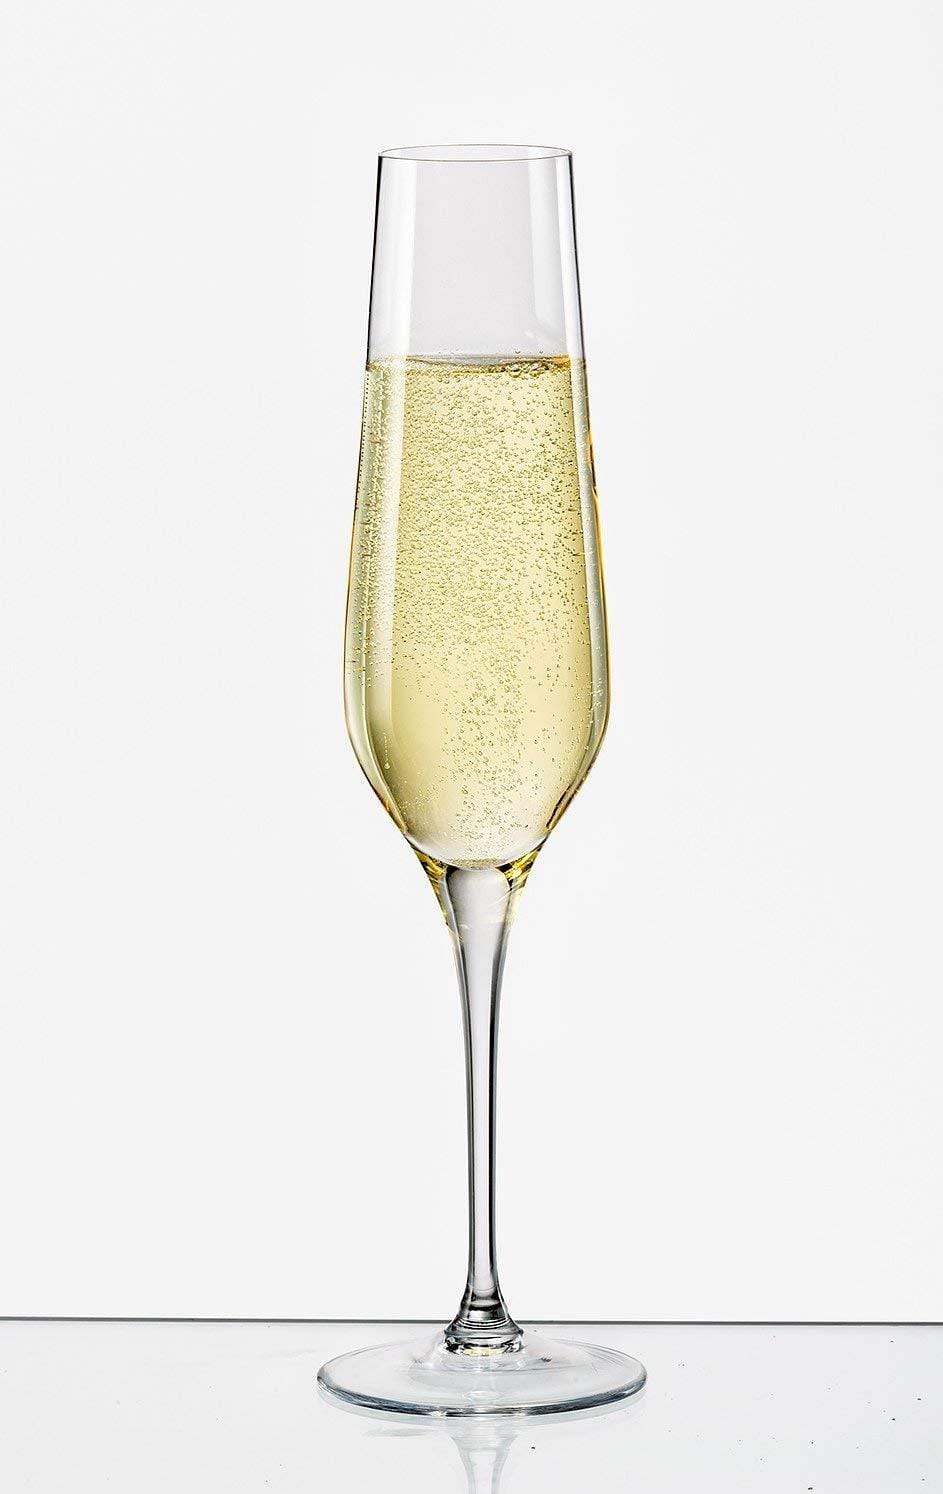 Bohemia Crystal Non Lead Crystal Rebecca Champagne Flute 195 ML Set of 6 pcs, Transparent, Non - Lead Crystal | Champagne Flute